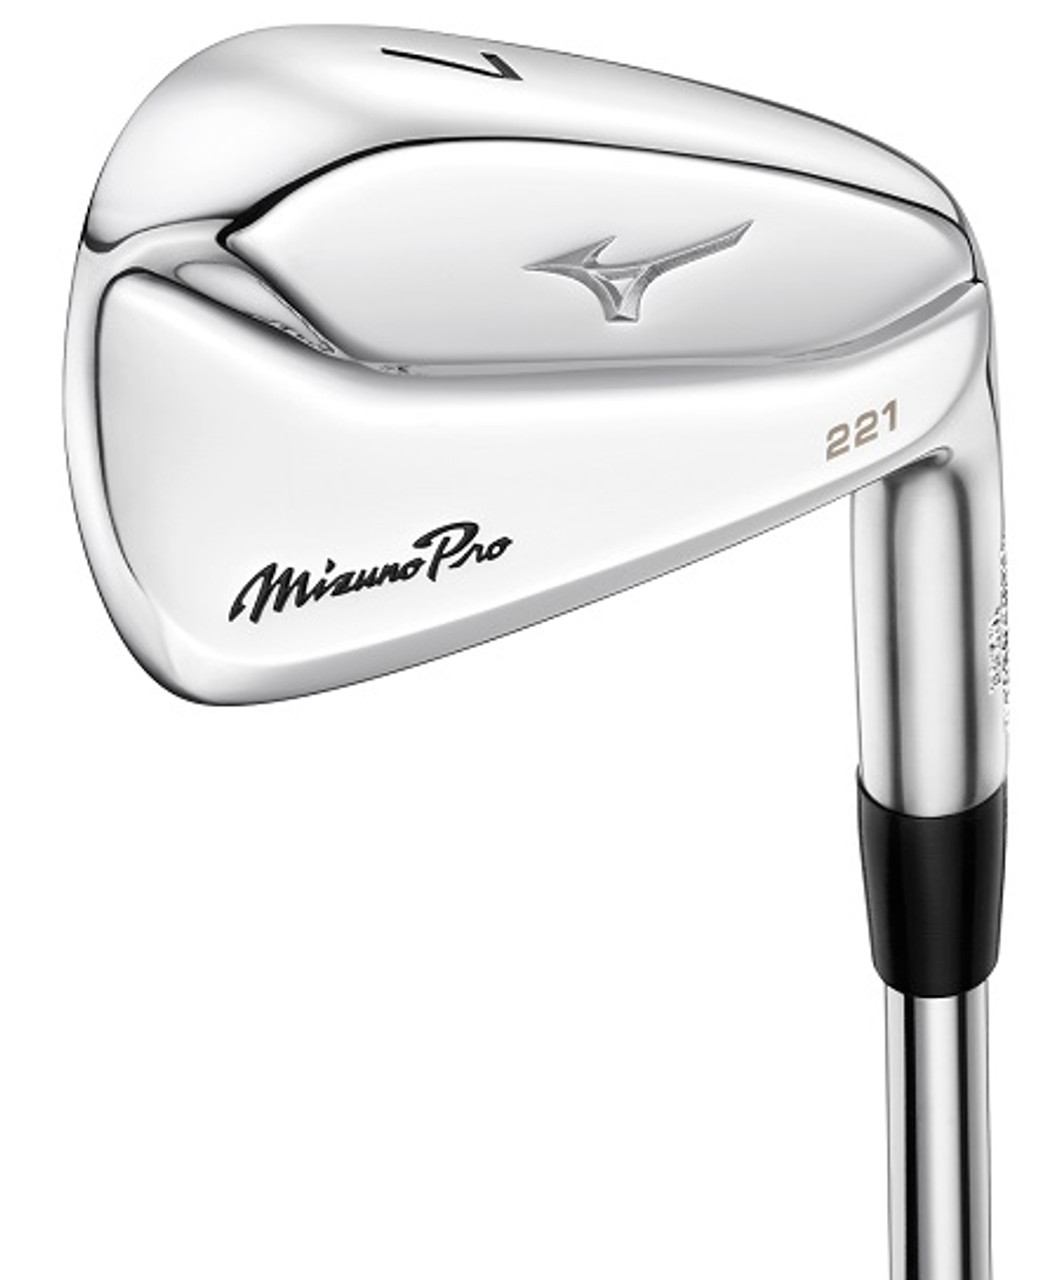 wiel scheiden kool Mizuno Golf Pro 221 Irons (7 Iron Set) | RockBottomGolf.com